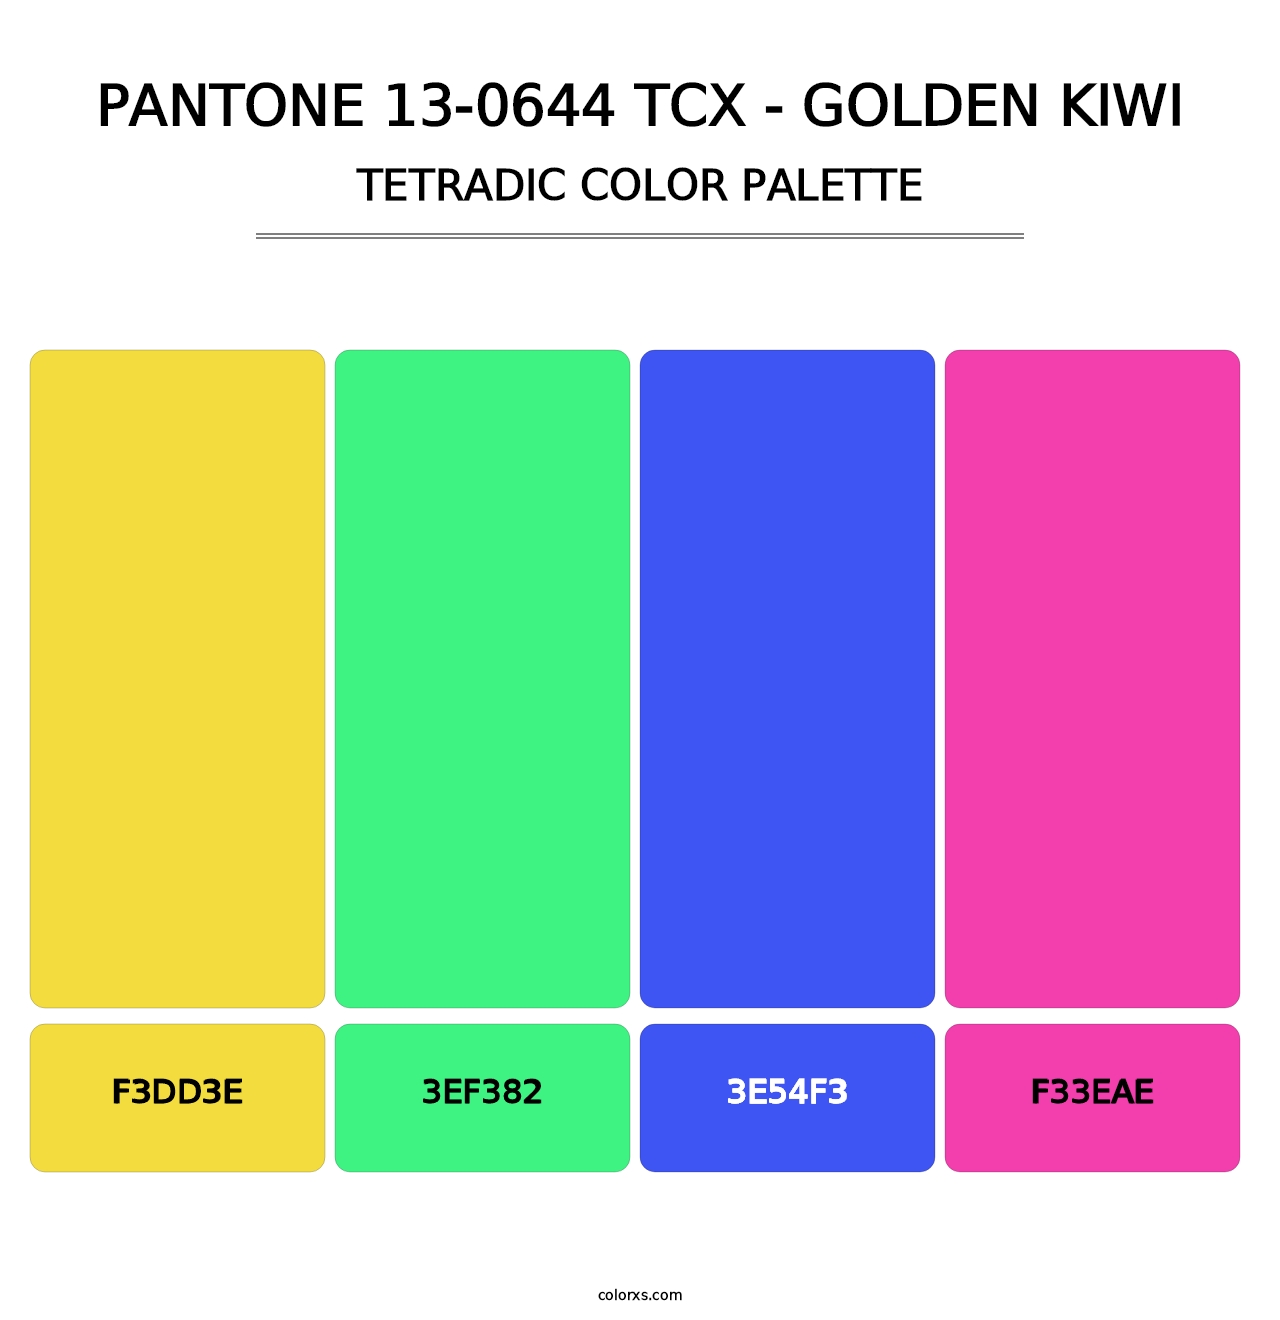 PANTONE 13-0644 TCX - Golden Kiwi - Tetradic Color Palette